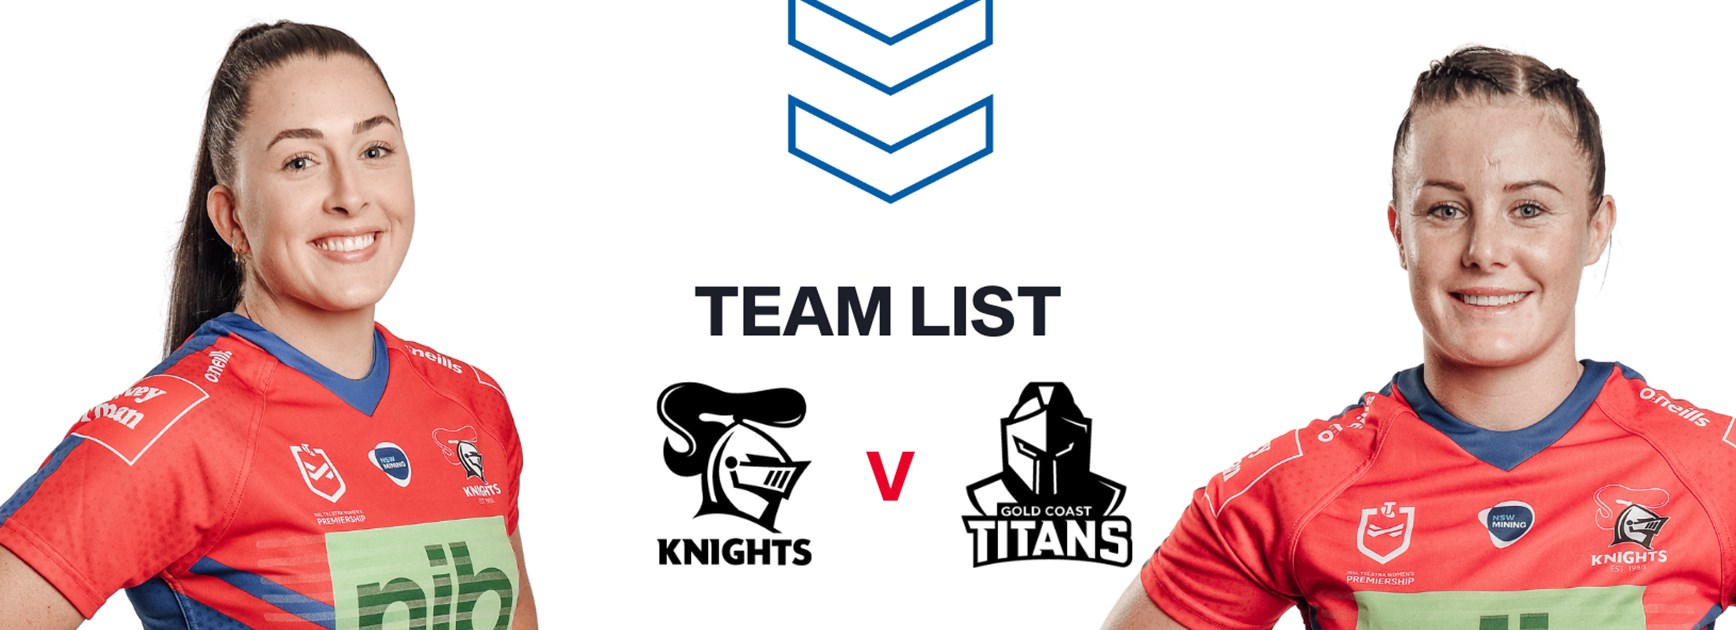 Titans v Knights Round 5 NRLW team list